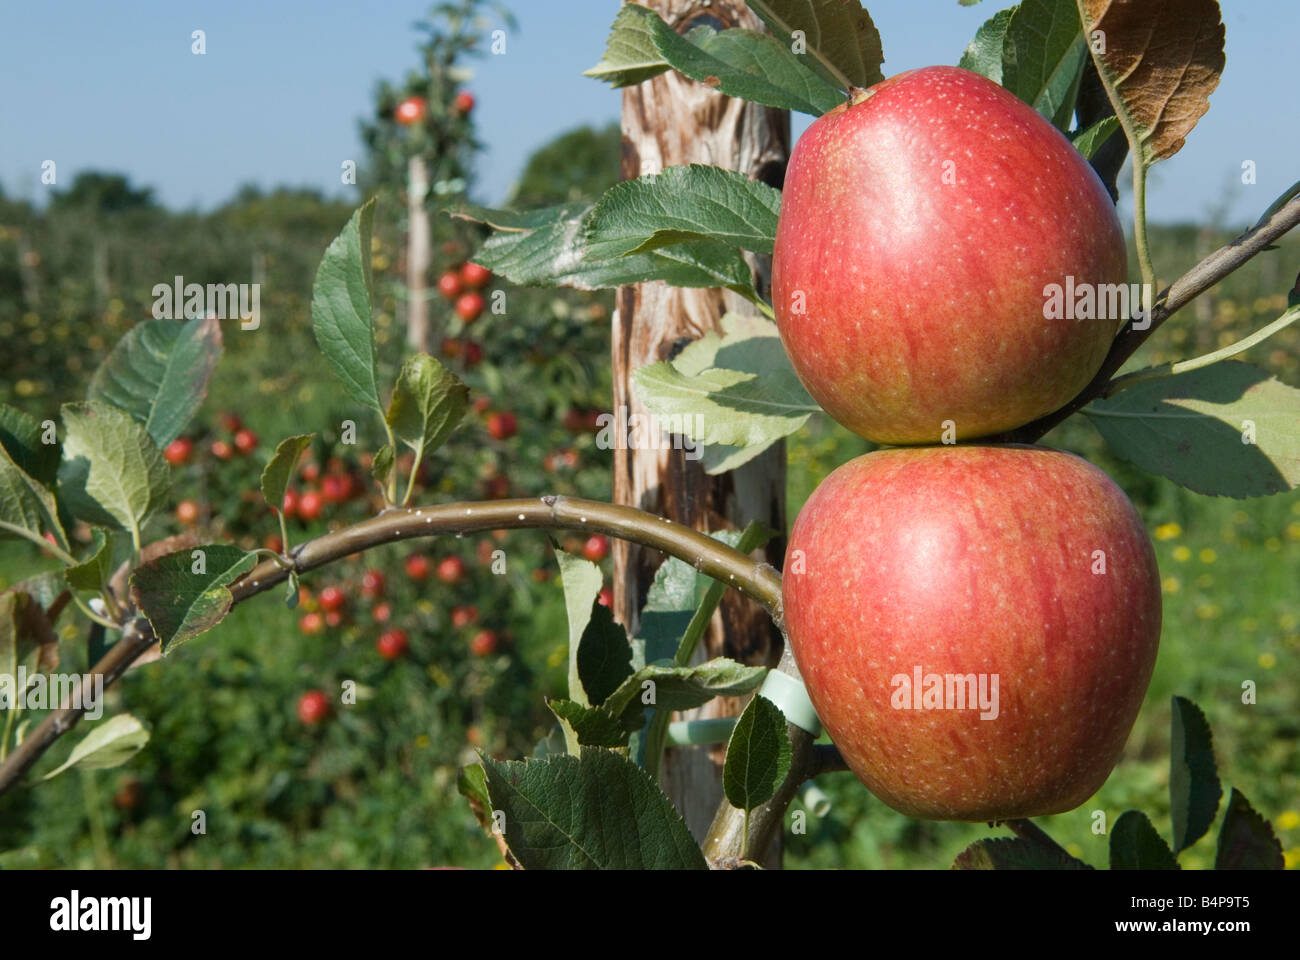 English Apples. Adams Pearmain apple. Lathcoats Apple Farm, Galleywood, Essex UK HOMER SYKES Stock Photo